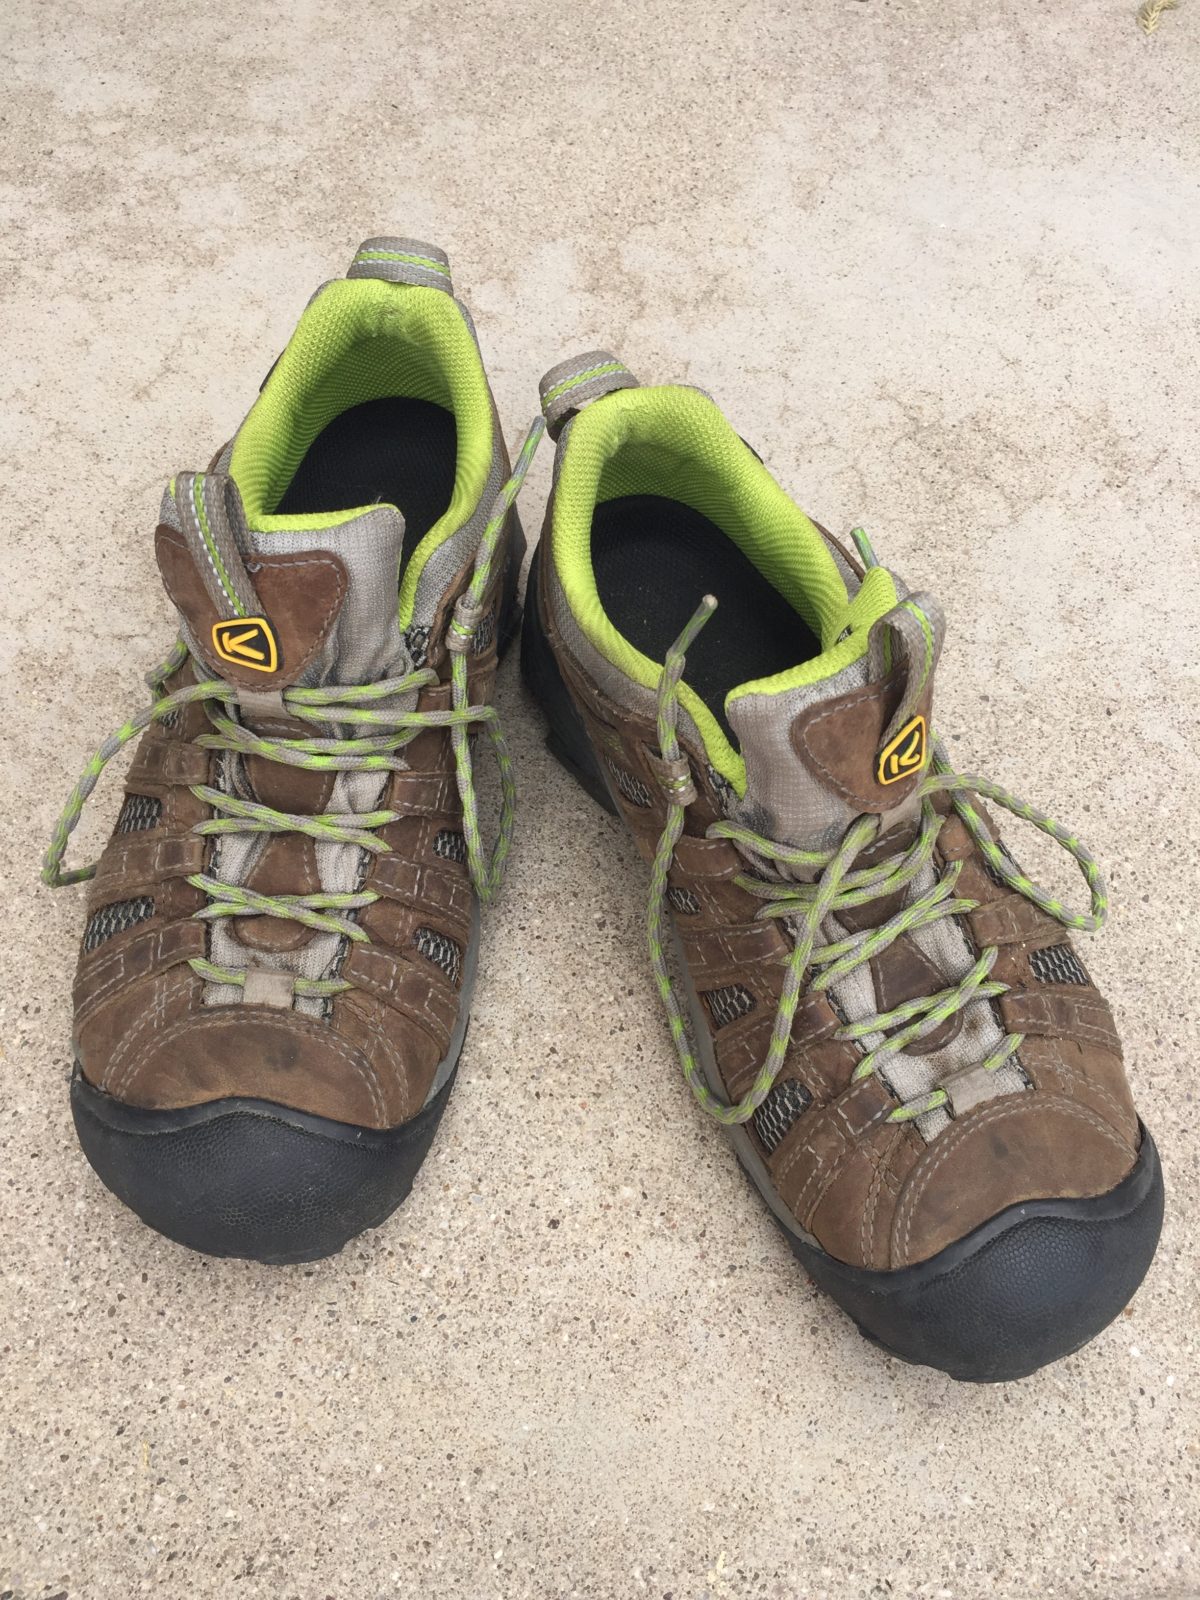 Replacing Those Beloved Hiking, Running and Walking Shoes